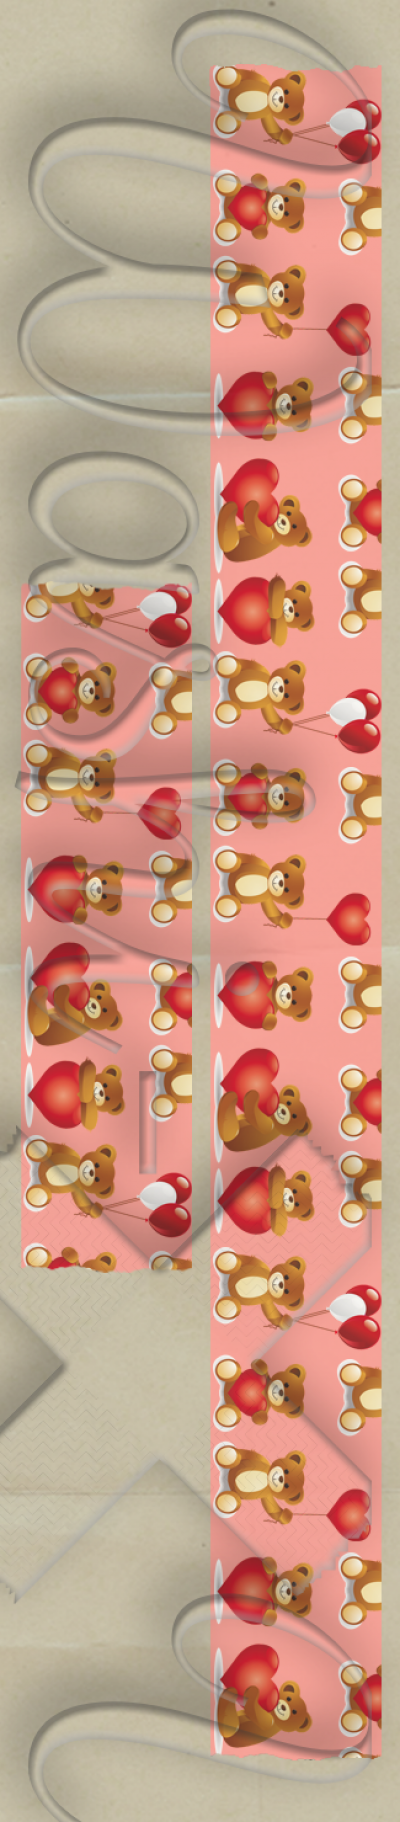 Washi-X Washi Tape Teddy bear patterned washi tape